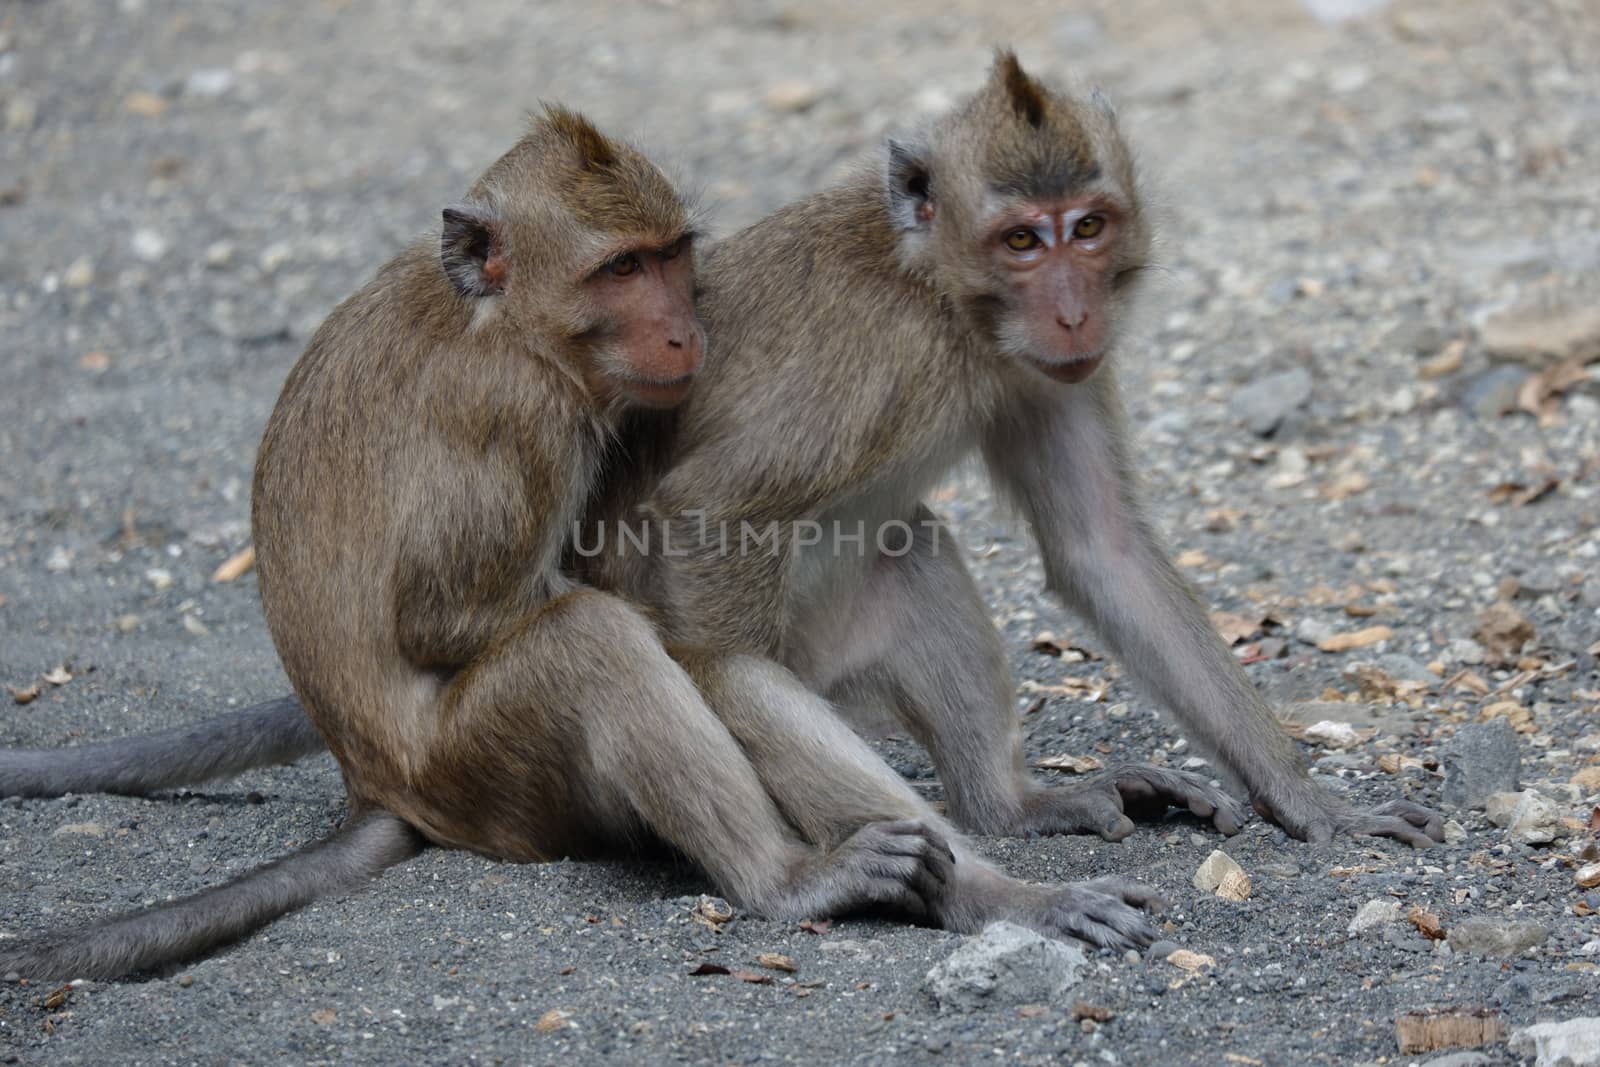 Macaca fascicularis (long-tailed macaque) by pengejarsenja